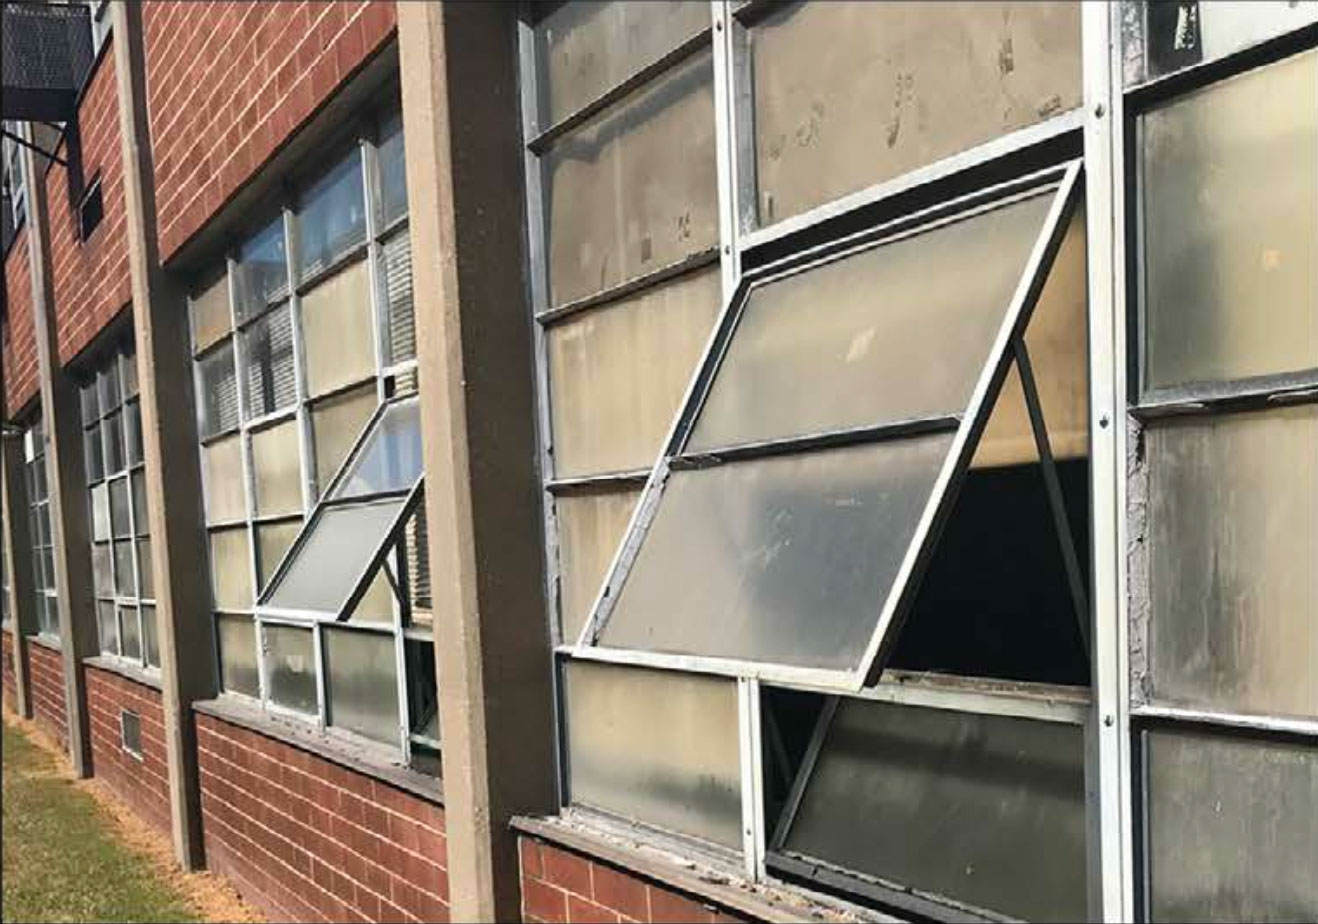 Aging windows at a Maryland school